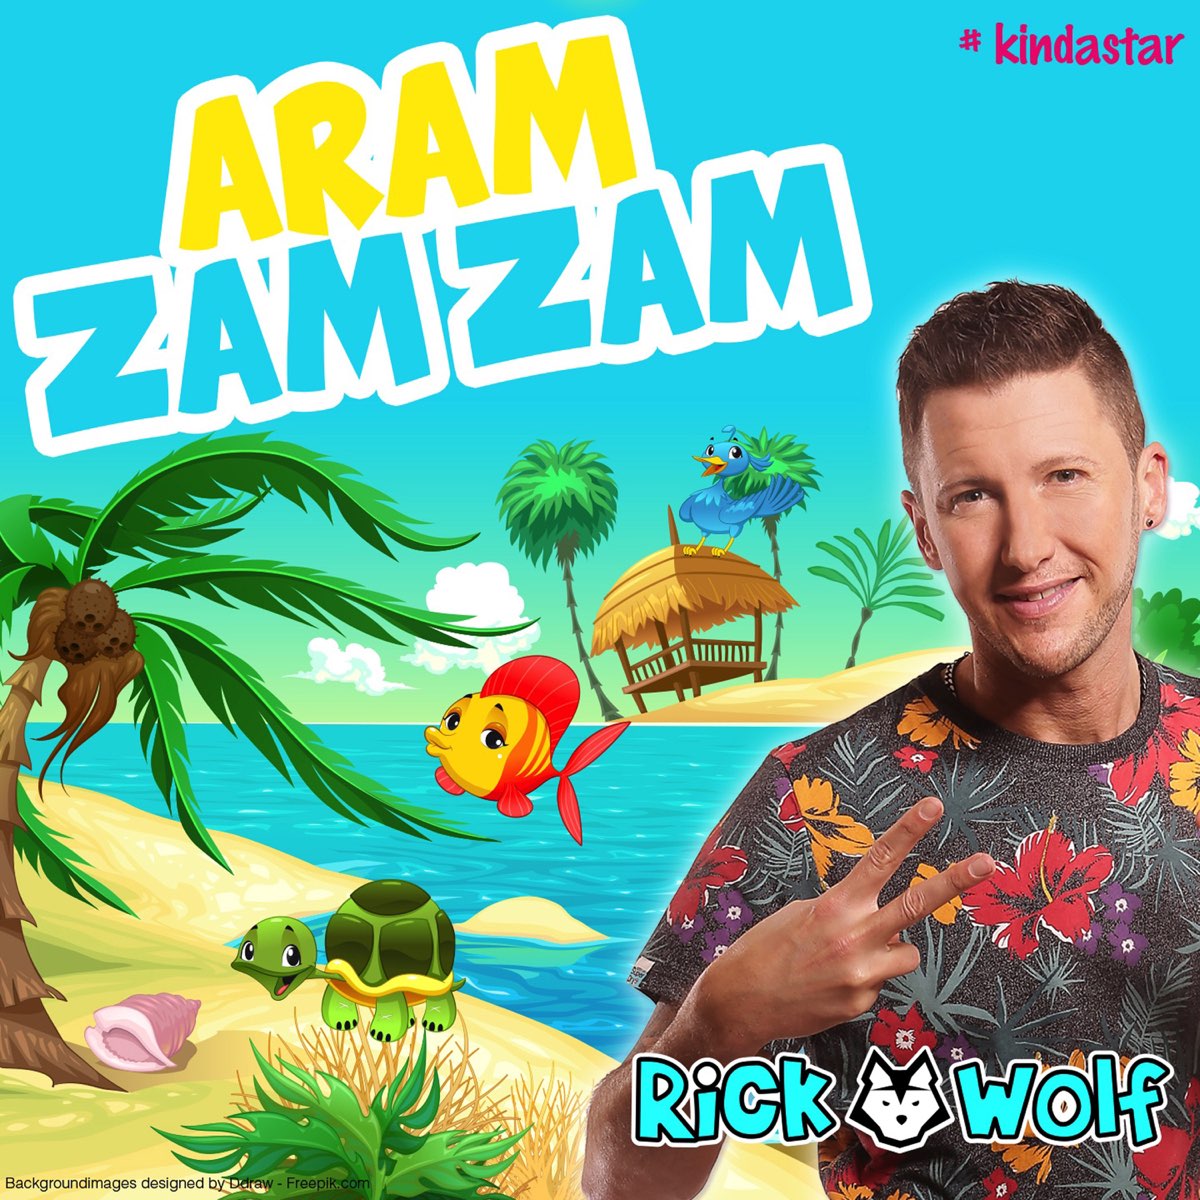 Aram zam zam. Aram zam zam Song | Dance Songs| Zumbra Kids Song. Music name Aram zam zam песня для пацанов ремиксы.